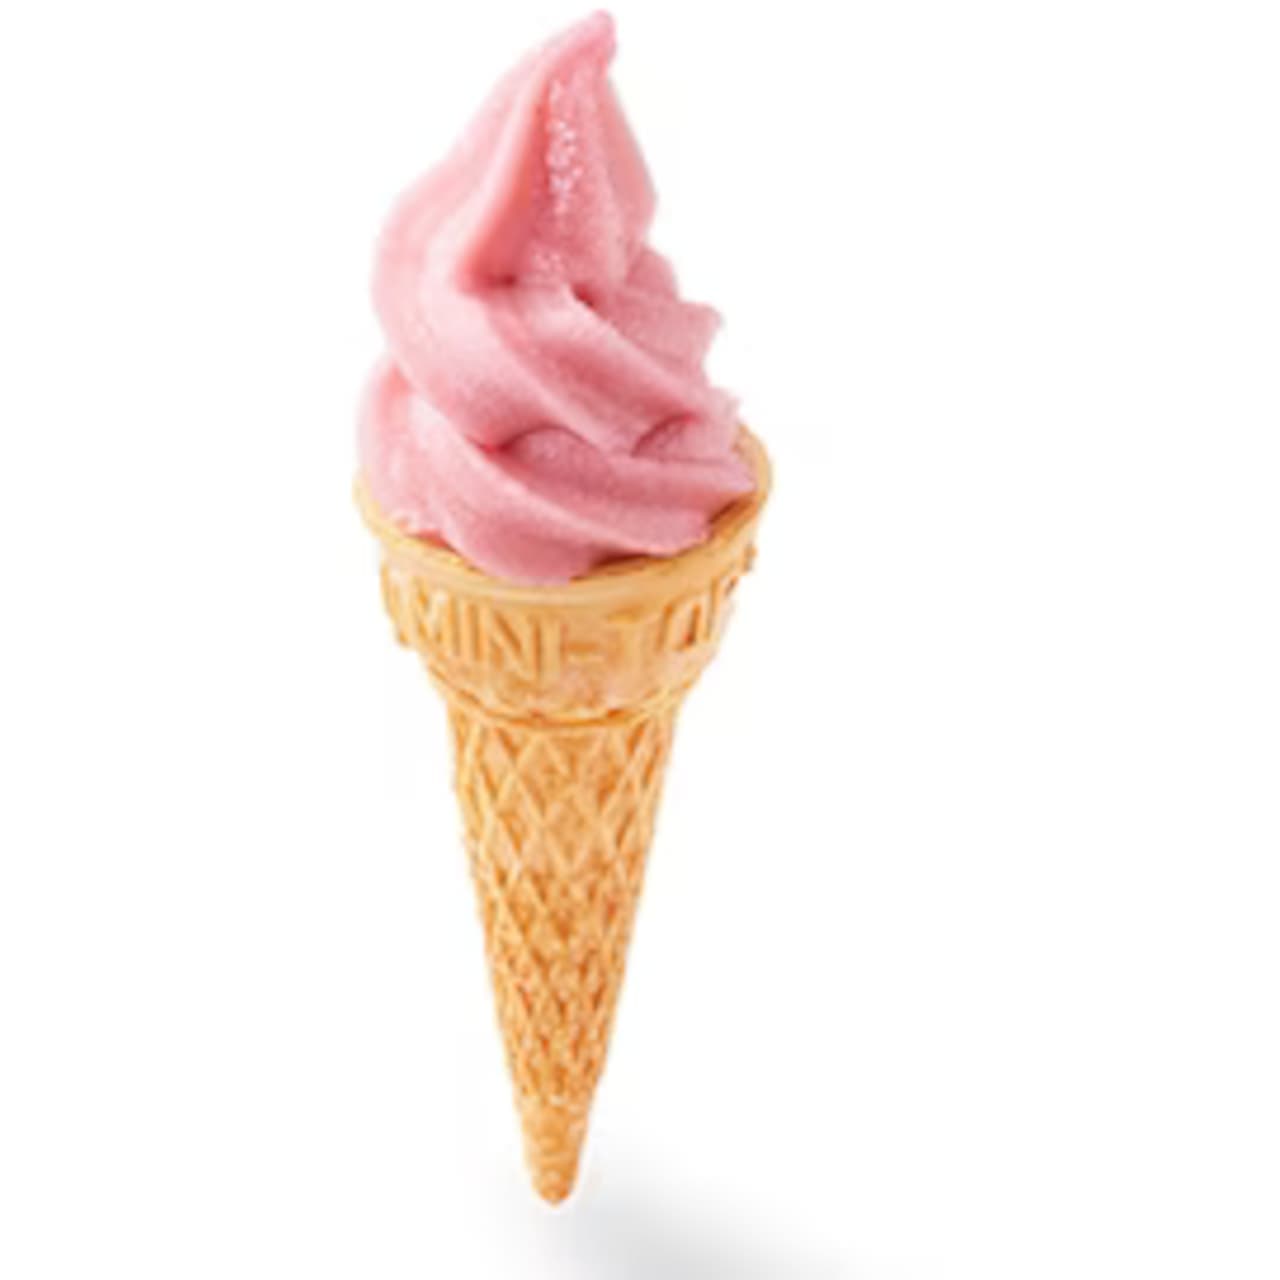 IKEA "Amaou strawberry soft serve ice cream